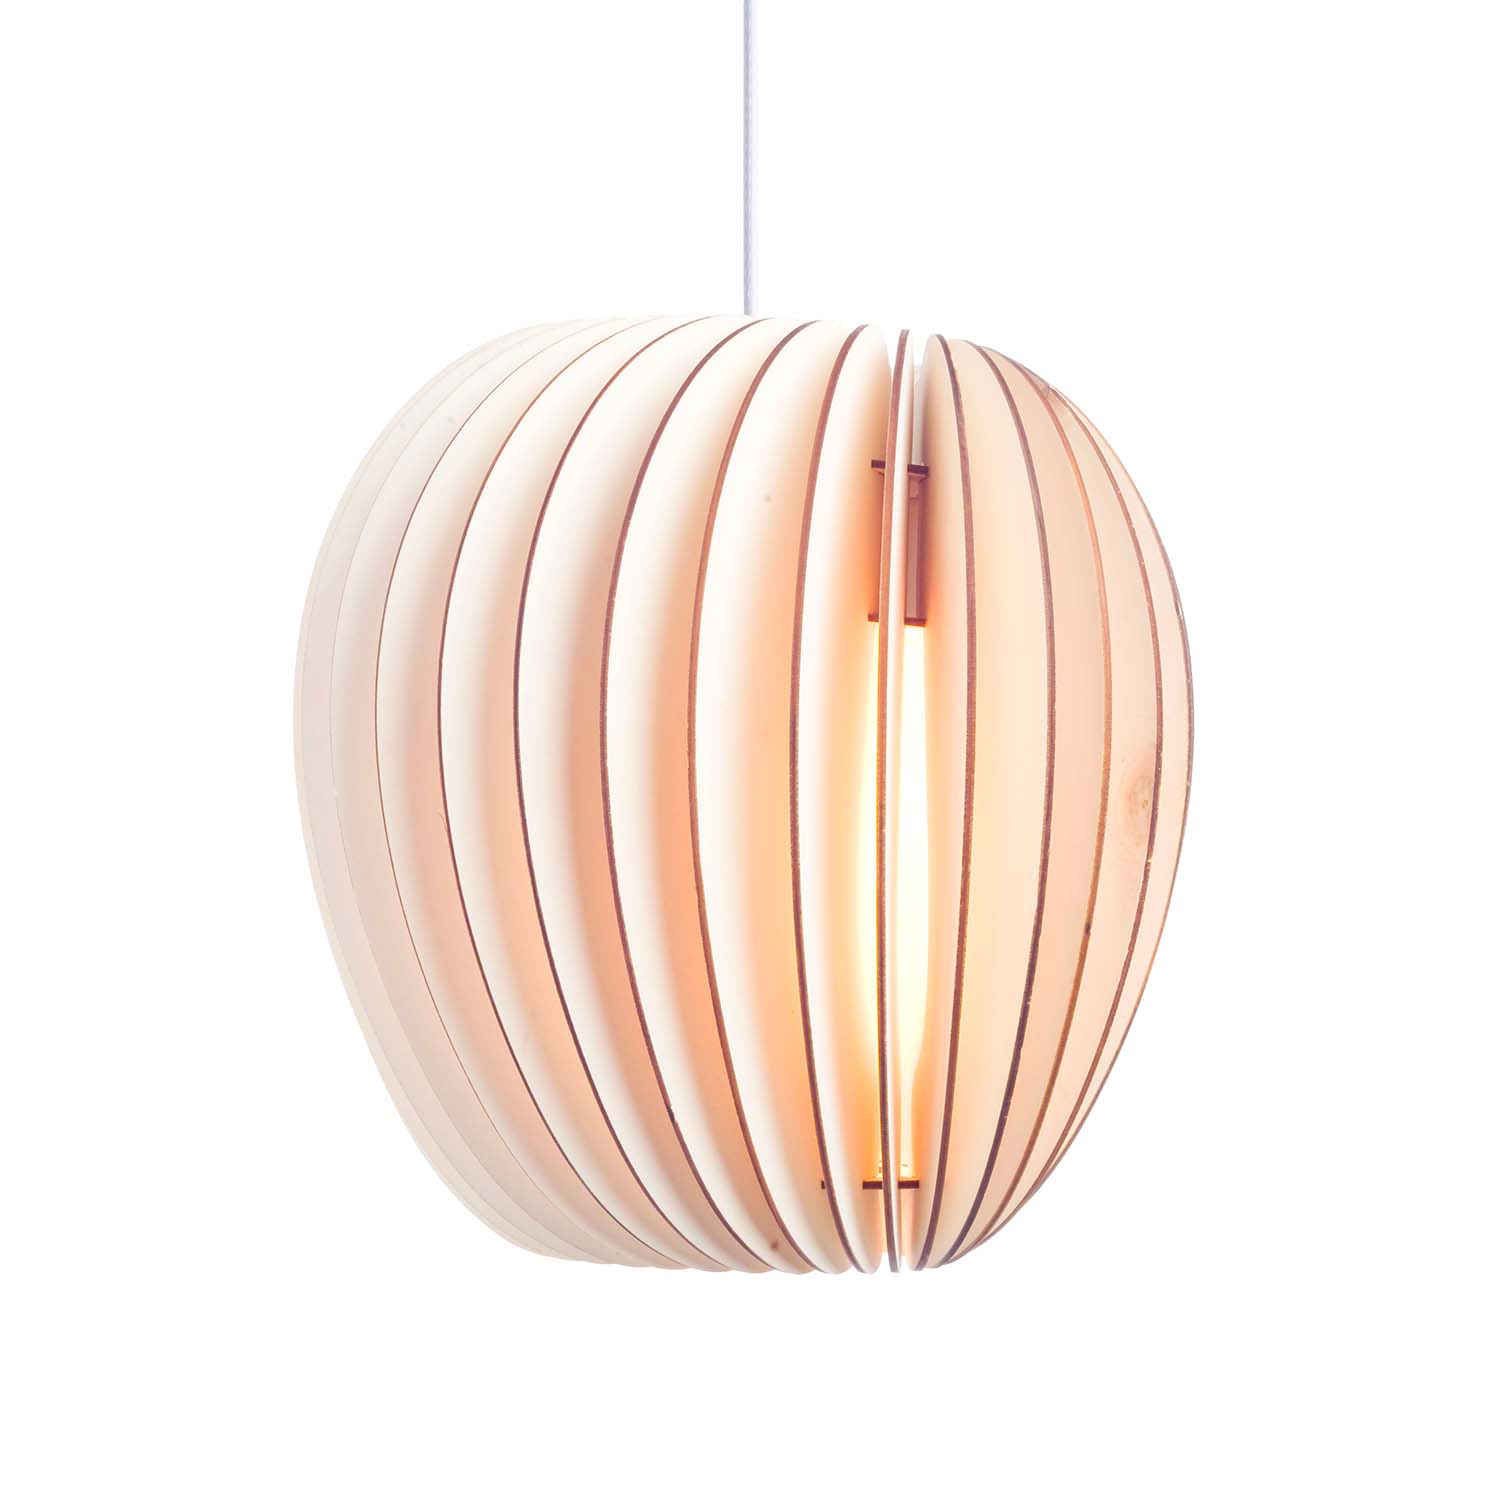 SERIES A PIRUM - Pendant light in designer poplar wood strip